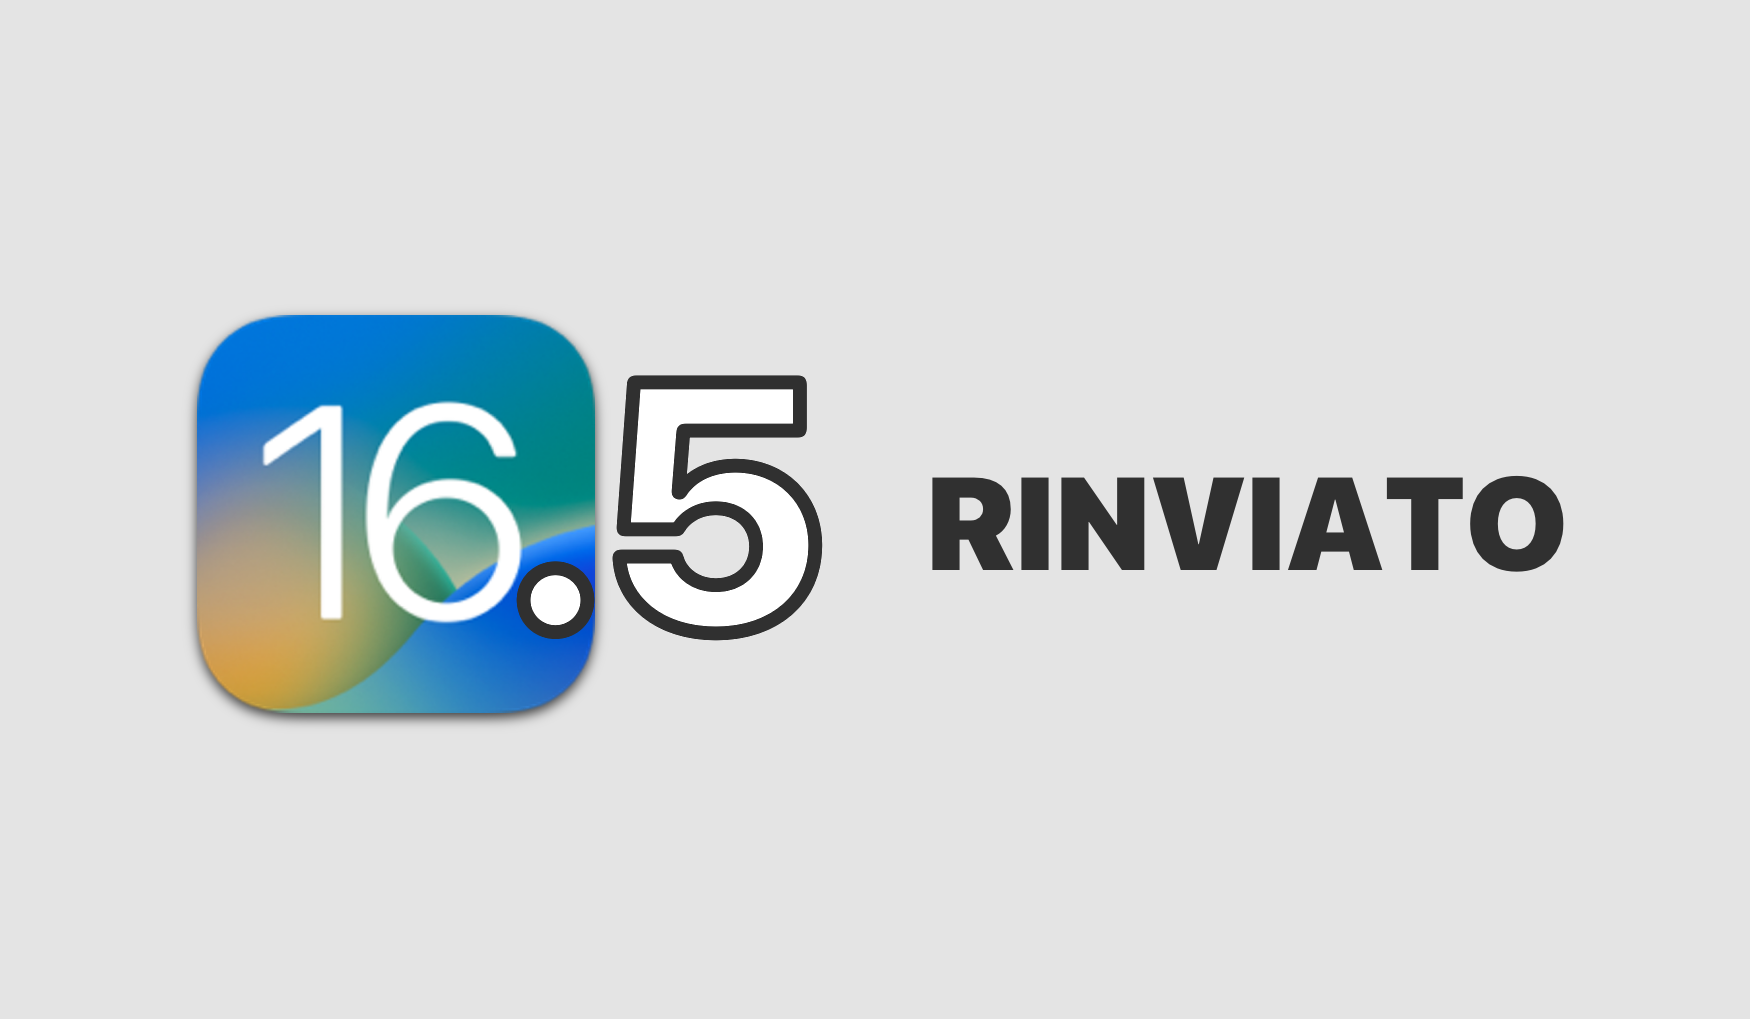 iOS 16, iOS 16.5, Rinviato, iPhone, iPad, Data, Download